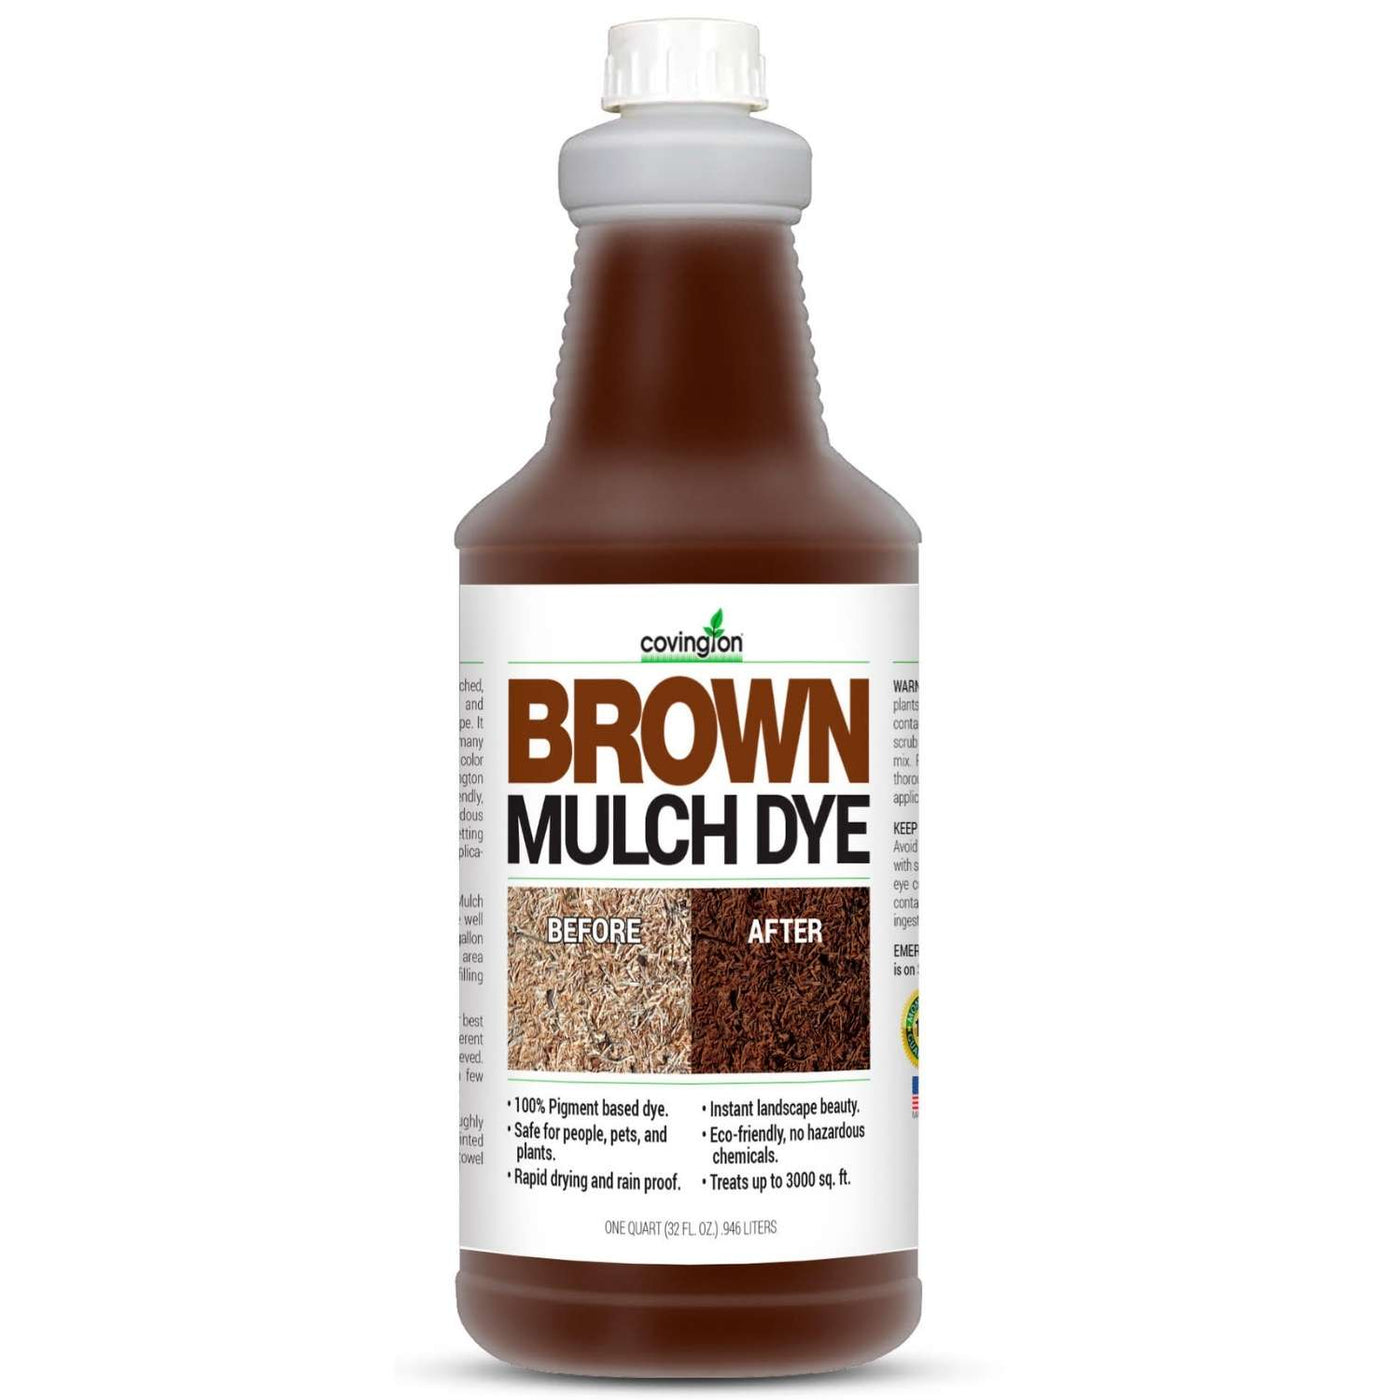 Brown Mulch Dye